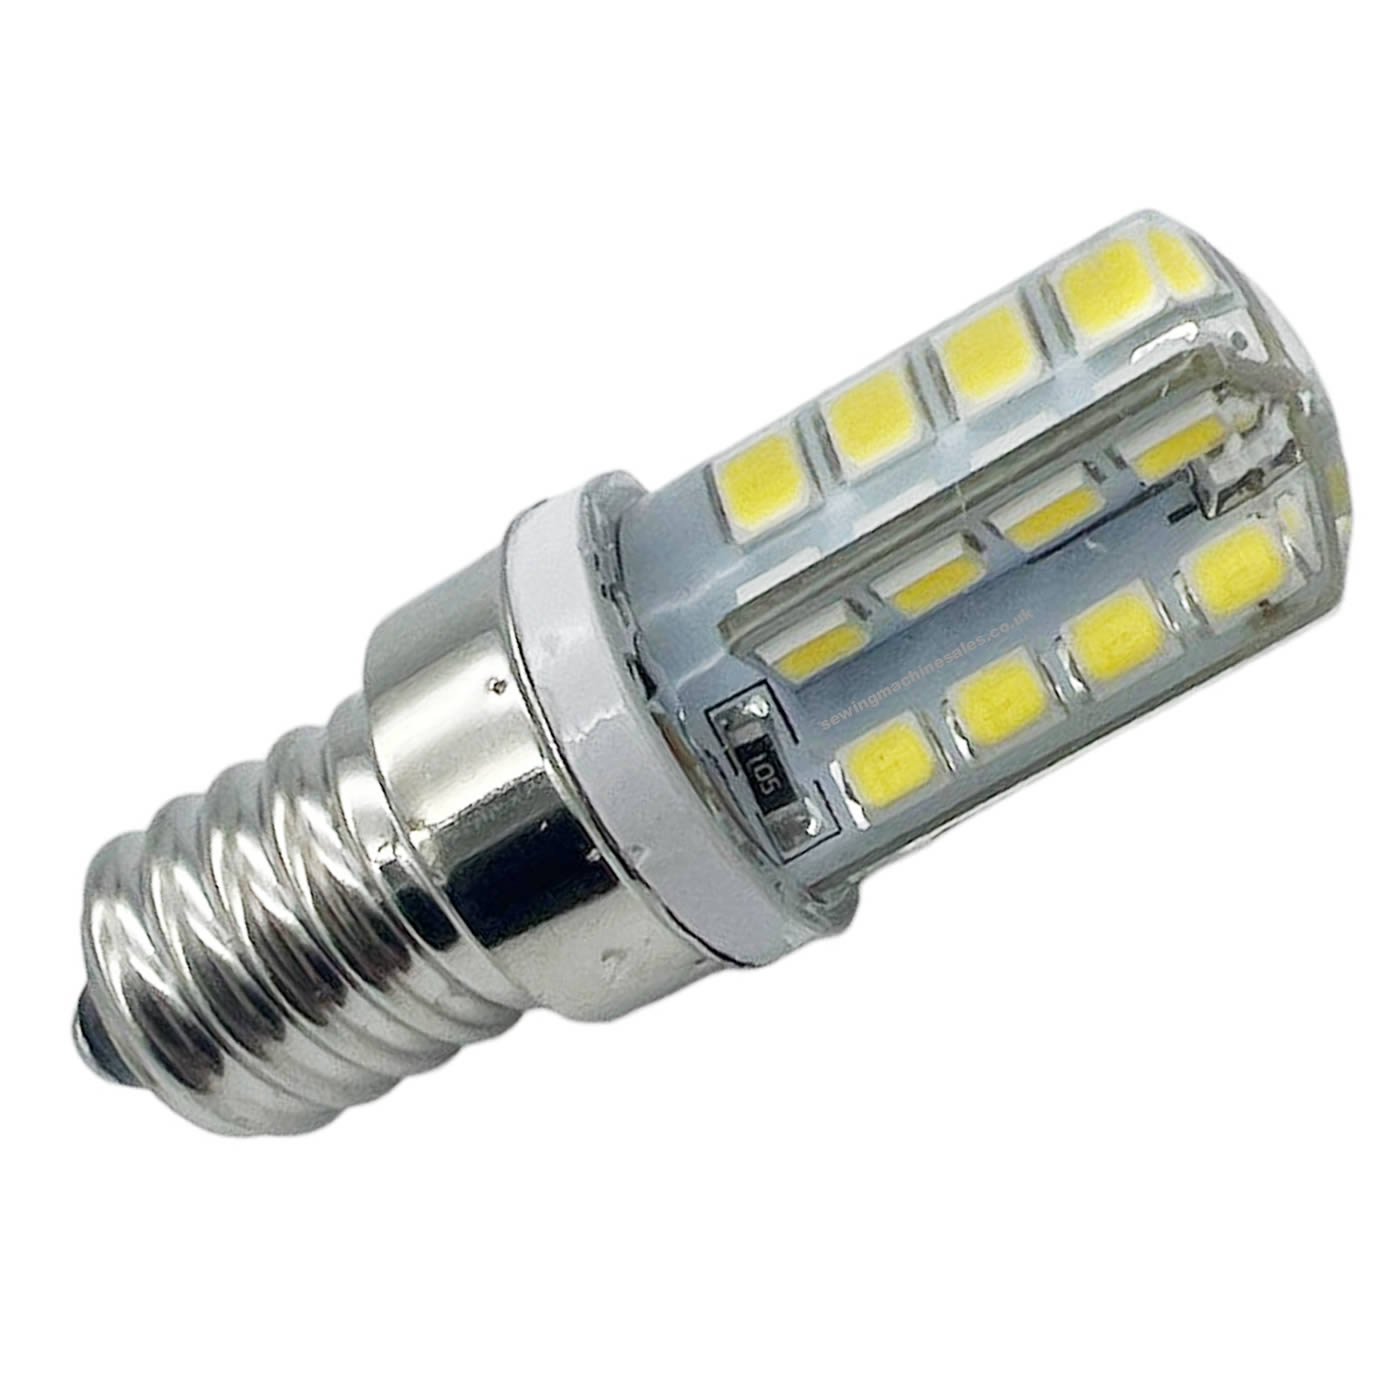 Singer Light Bulb LED Sewing Machine Screw in